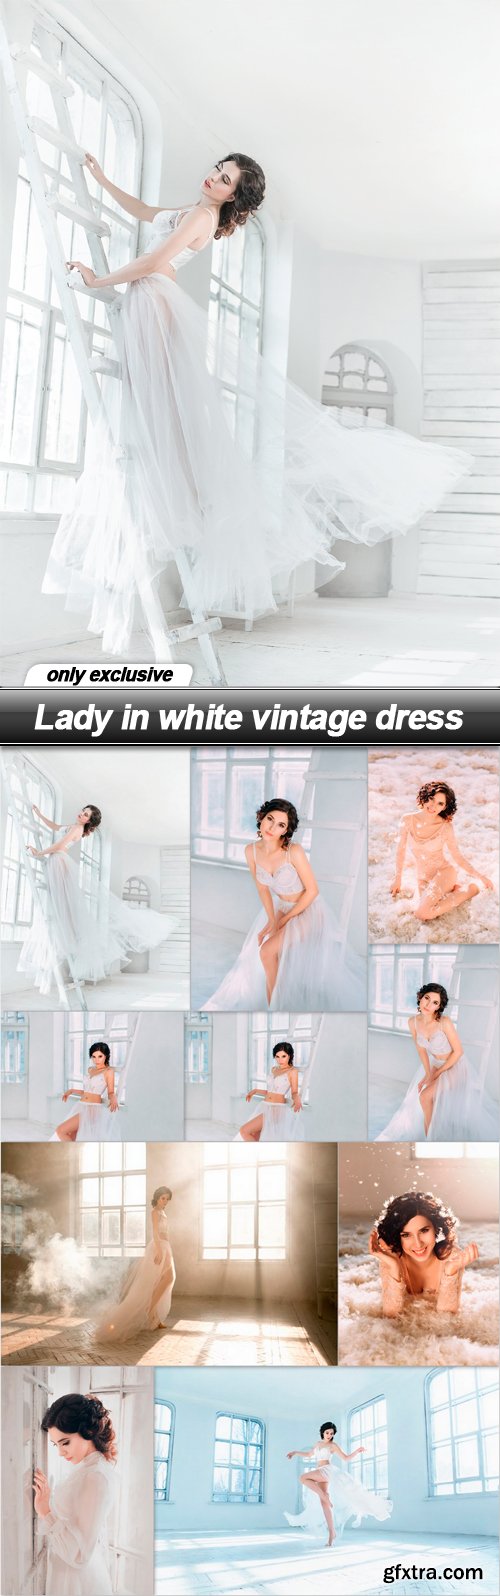 Lady in white vintage dress - 10 UHQ JPEG